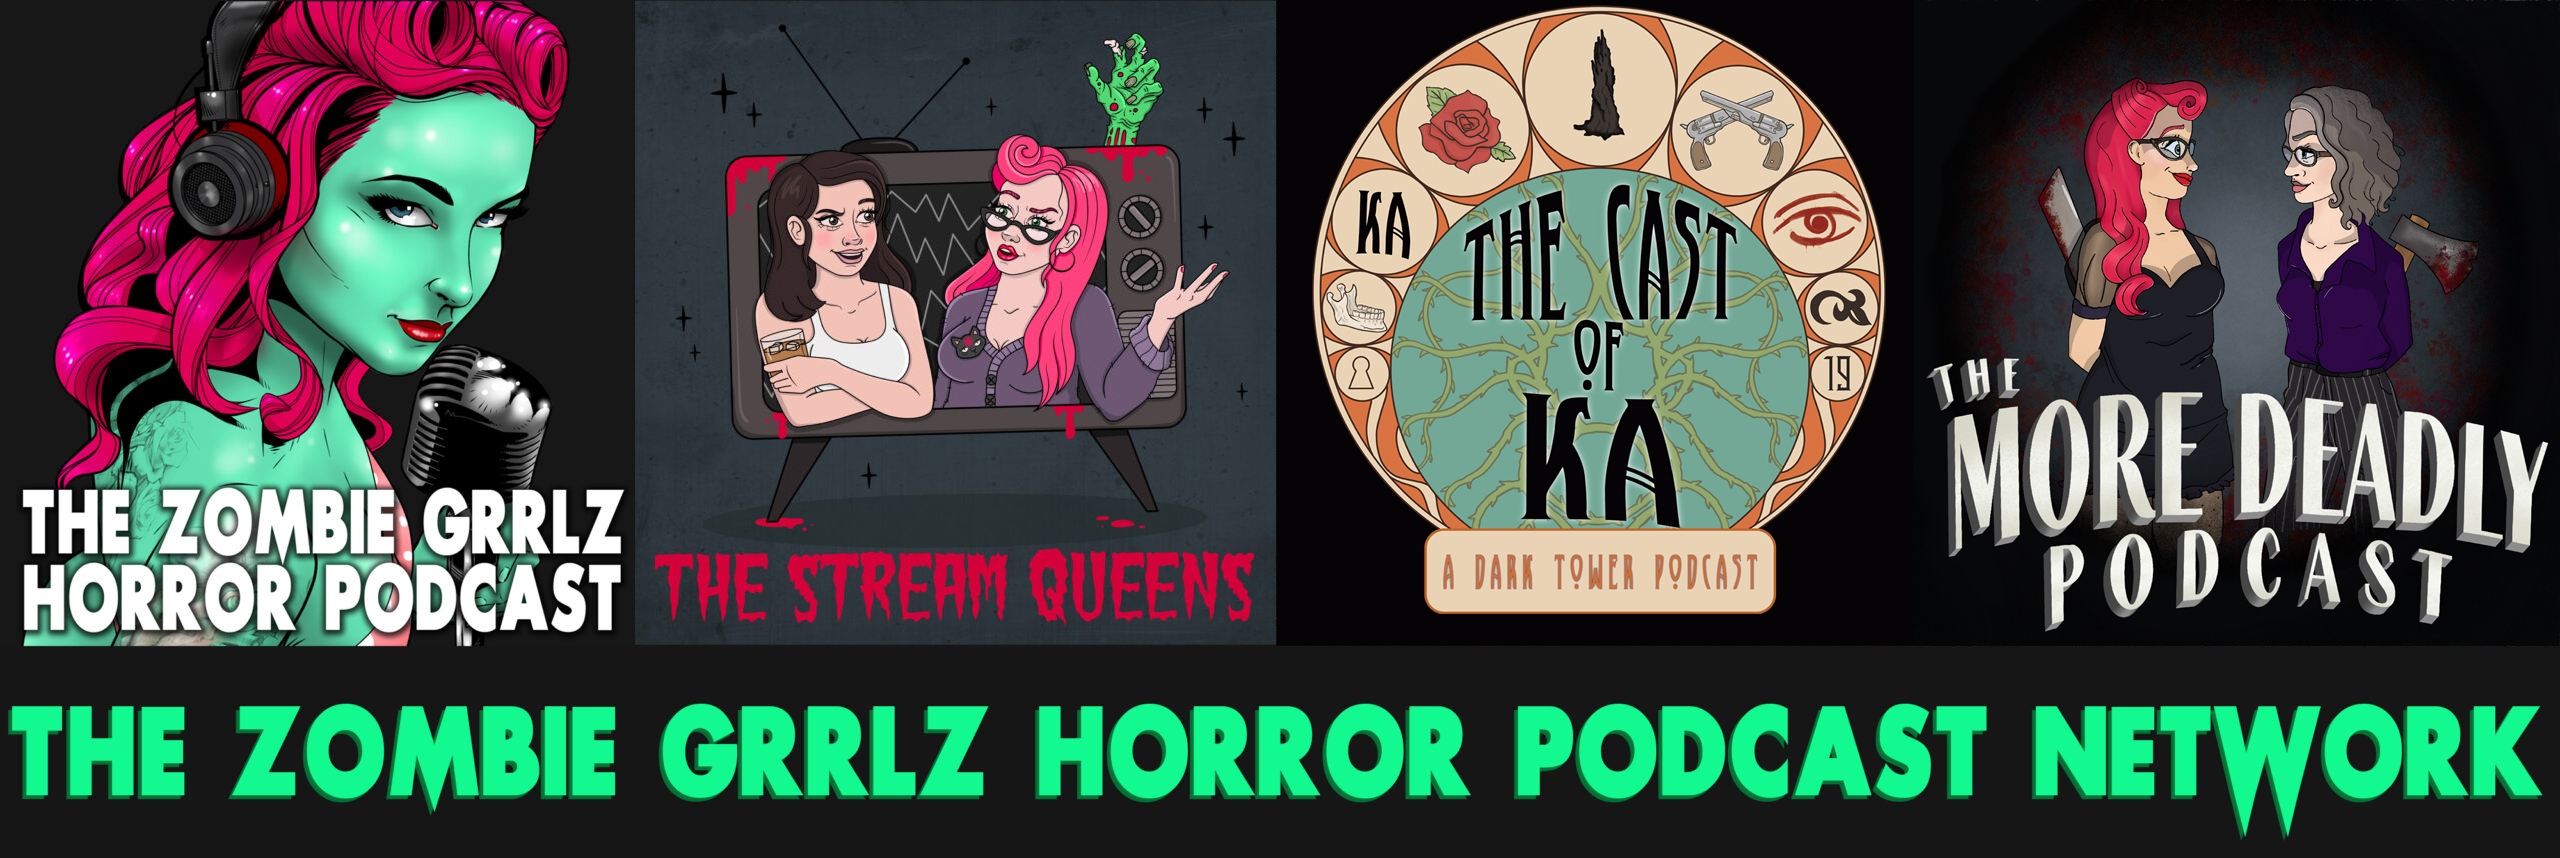 The Zombie Grrlz Horror Podcast